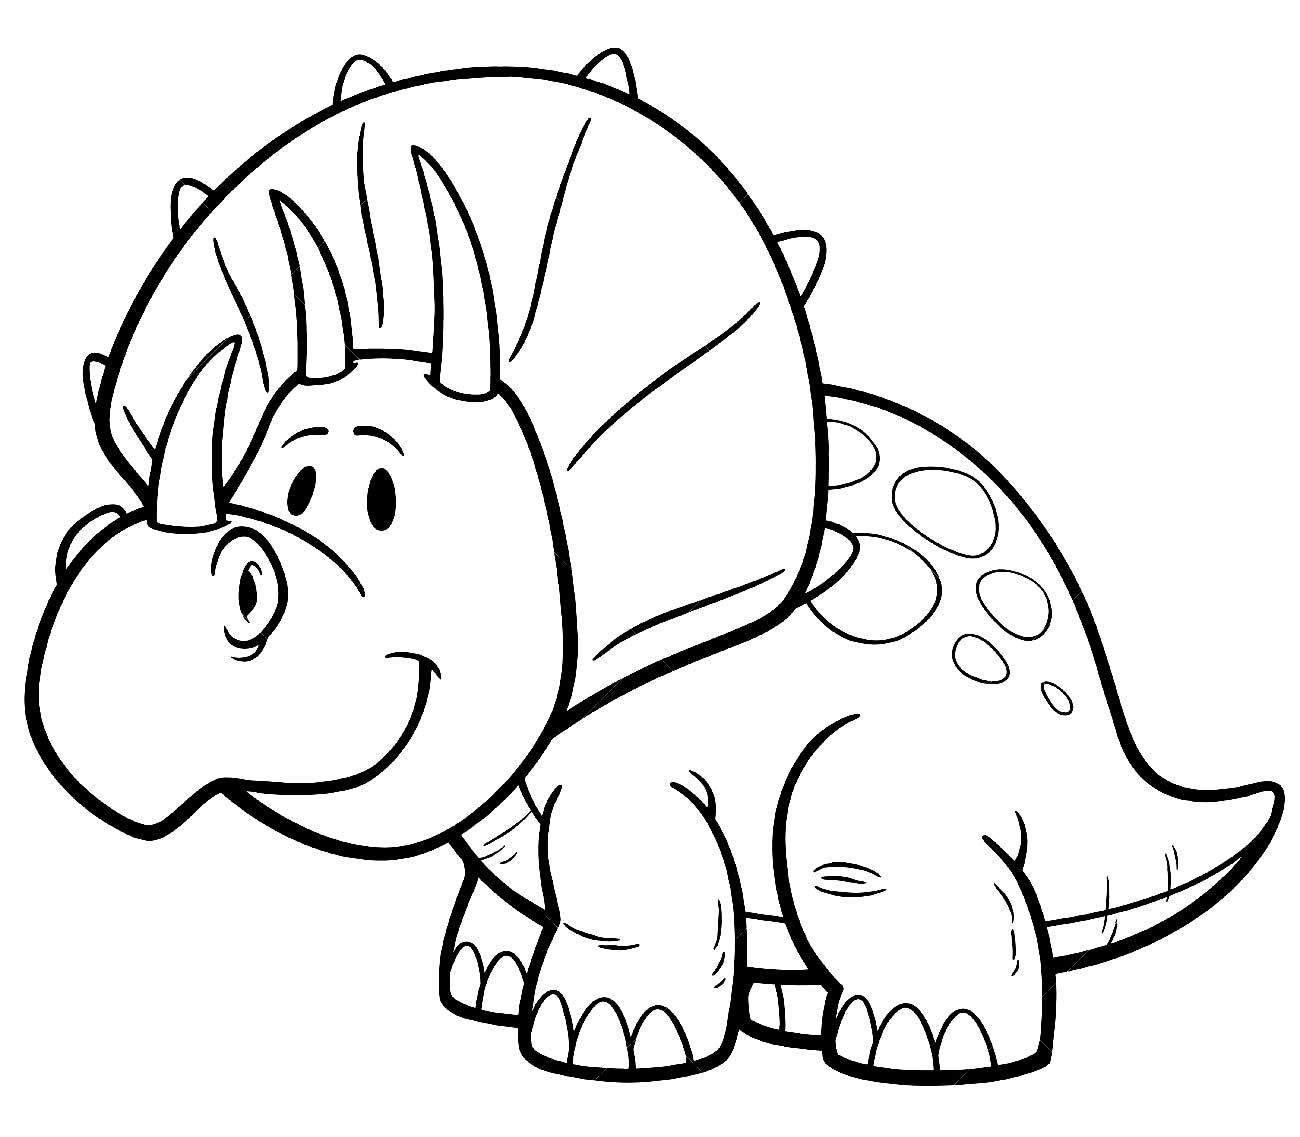 Dinossauro baby para colorir - Imprimir Desenhos